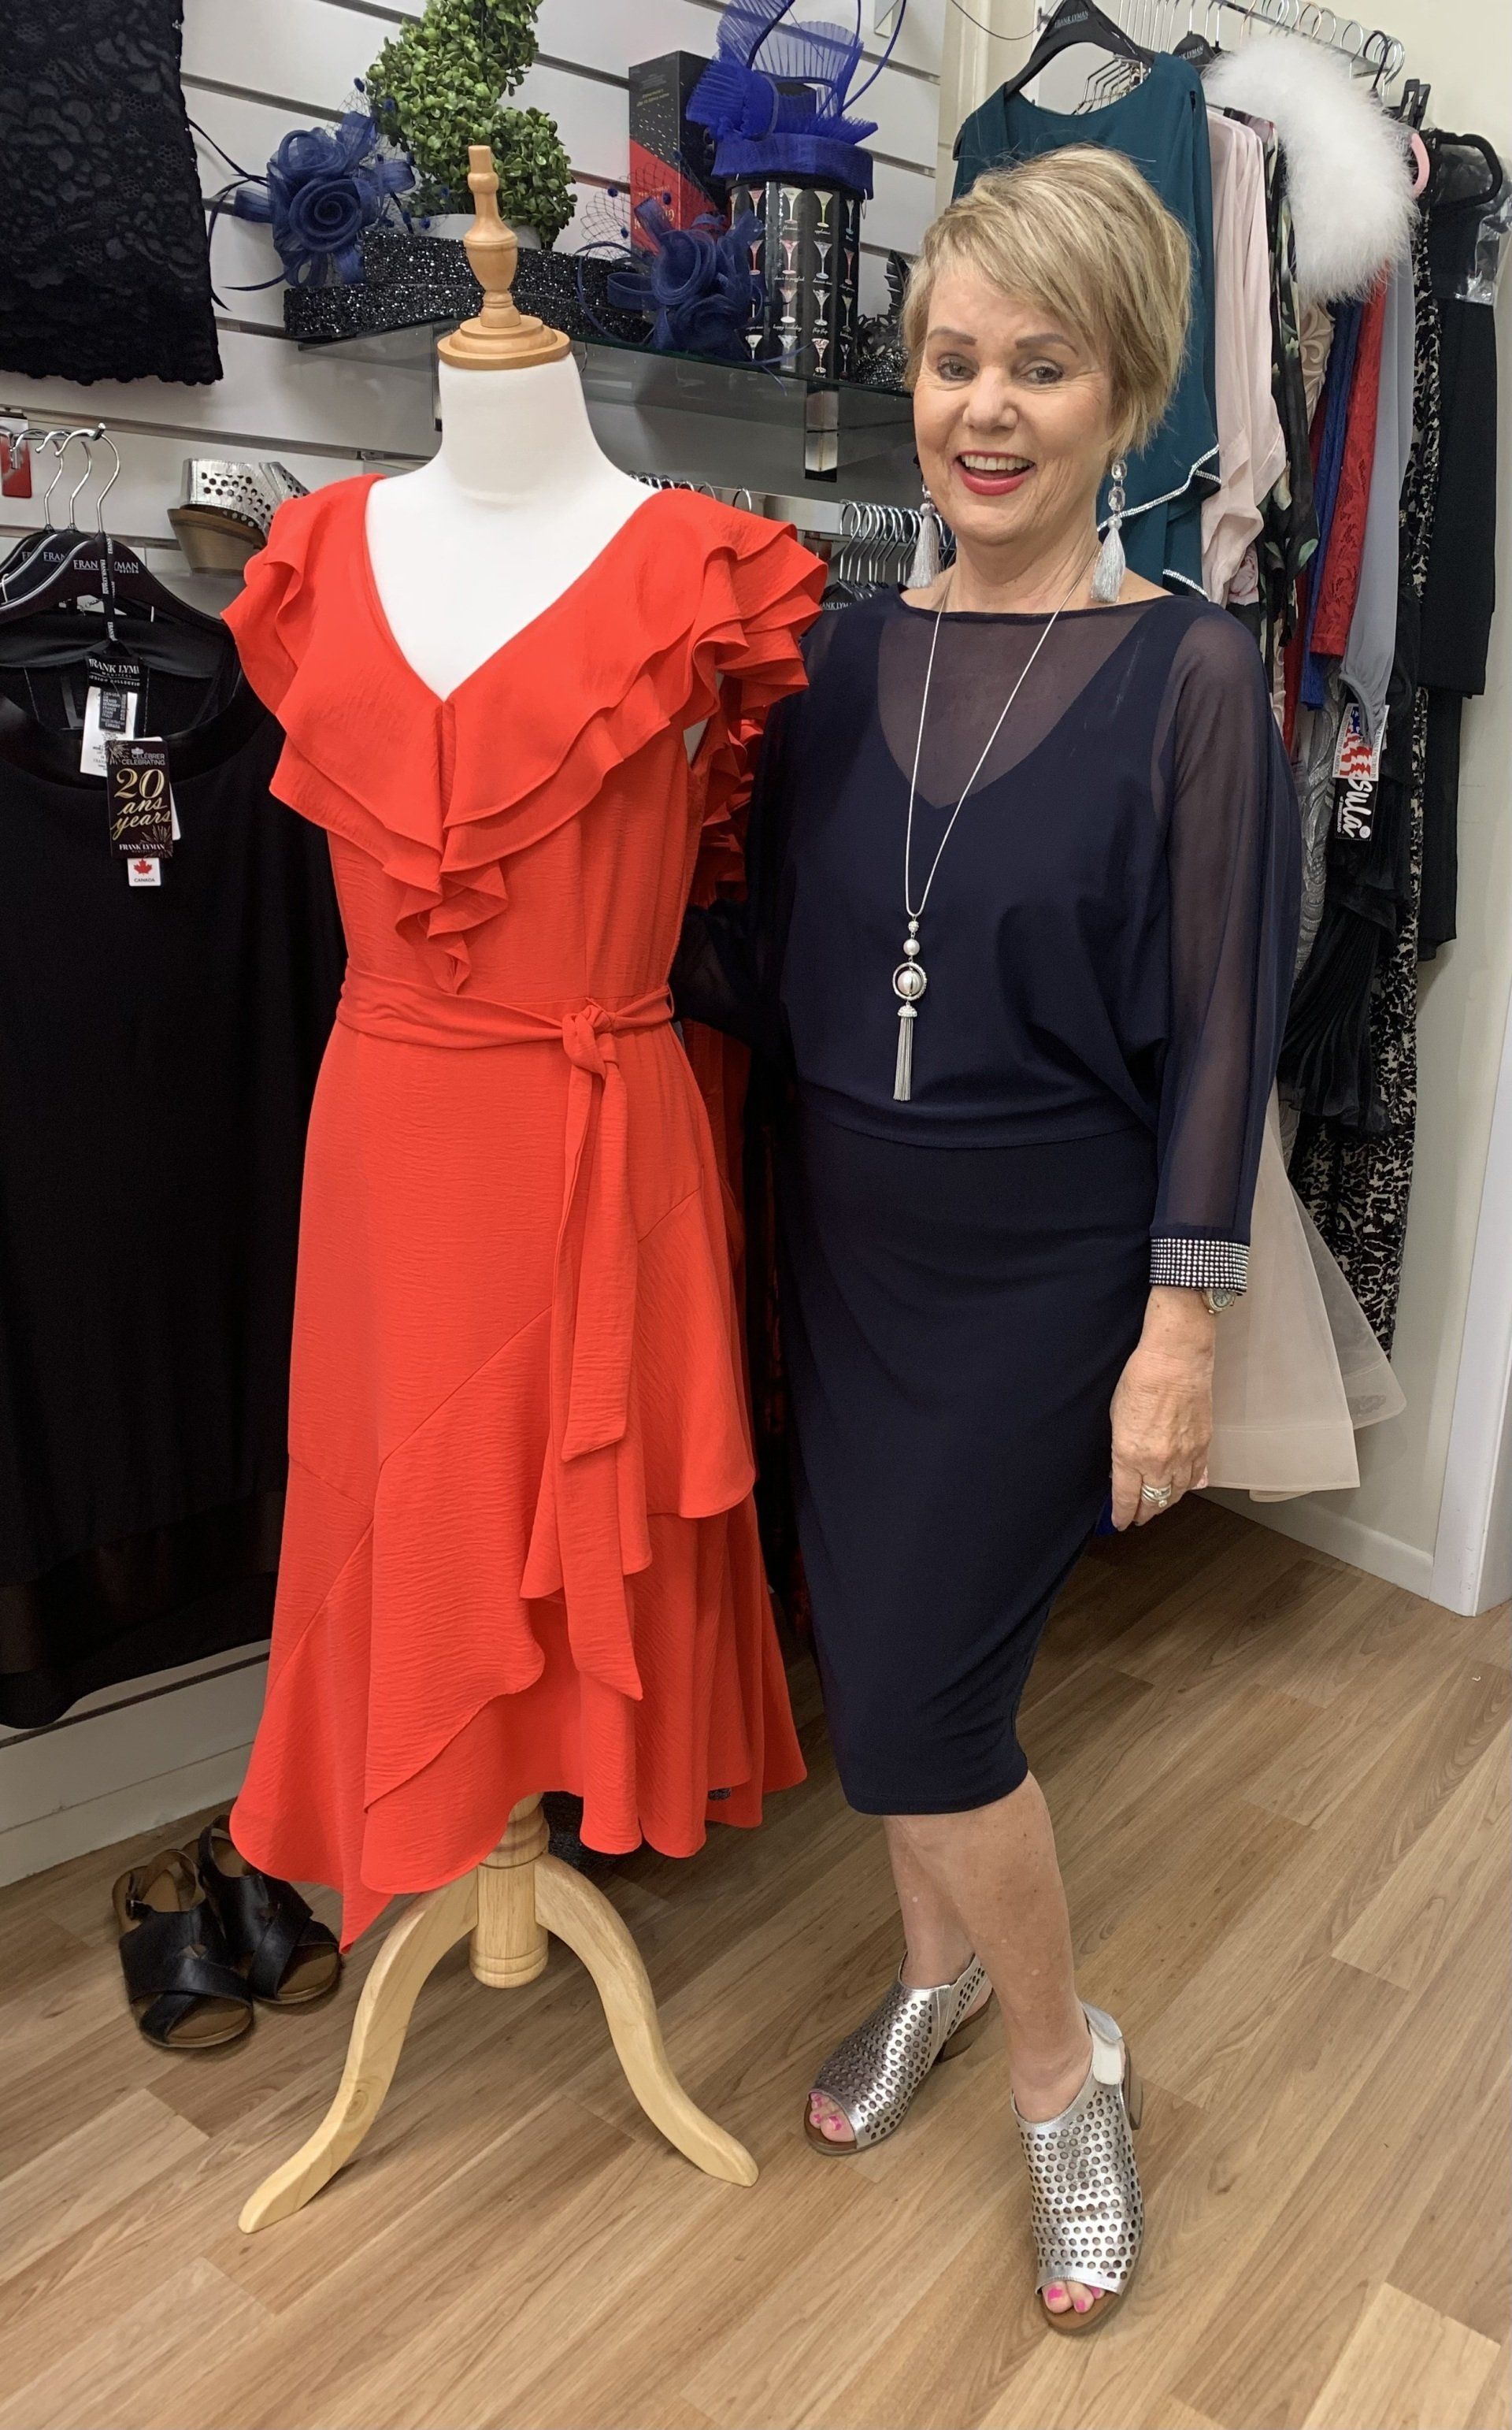 Red Dress on Mannequin and Blue Dress on Vikki  — Sunshine Coast